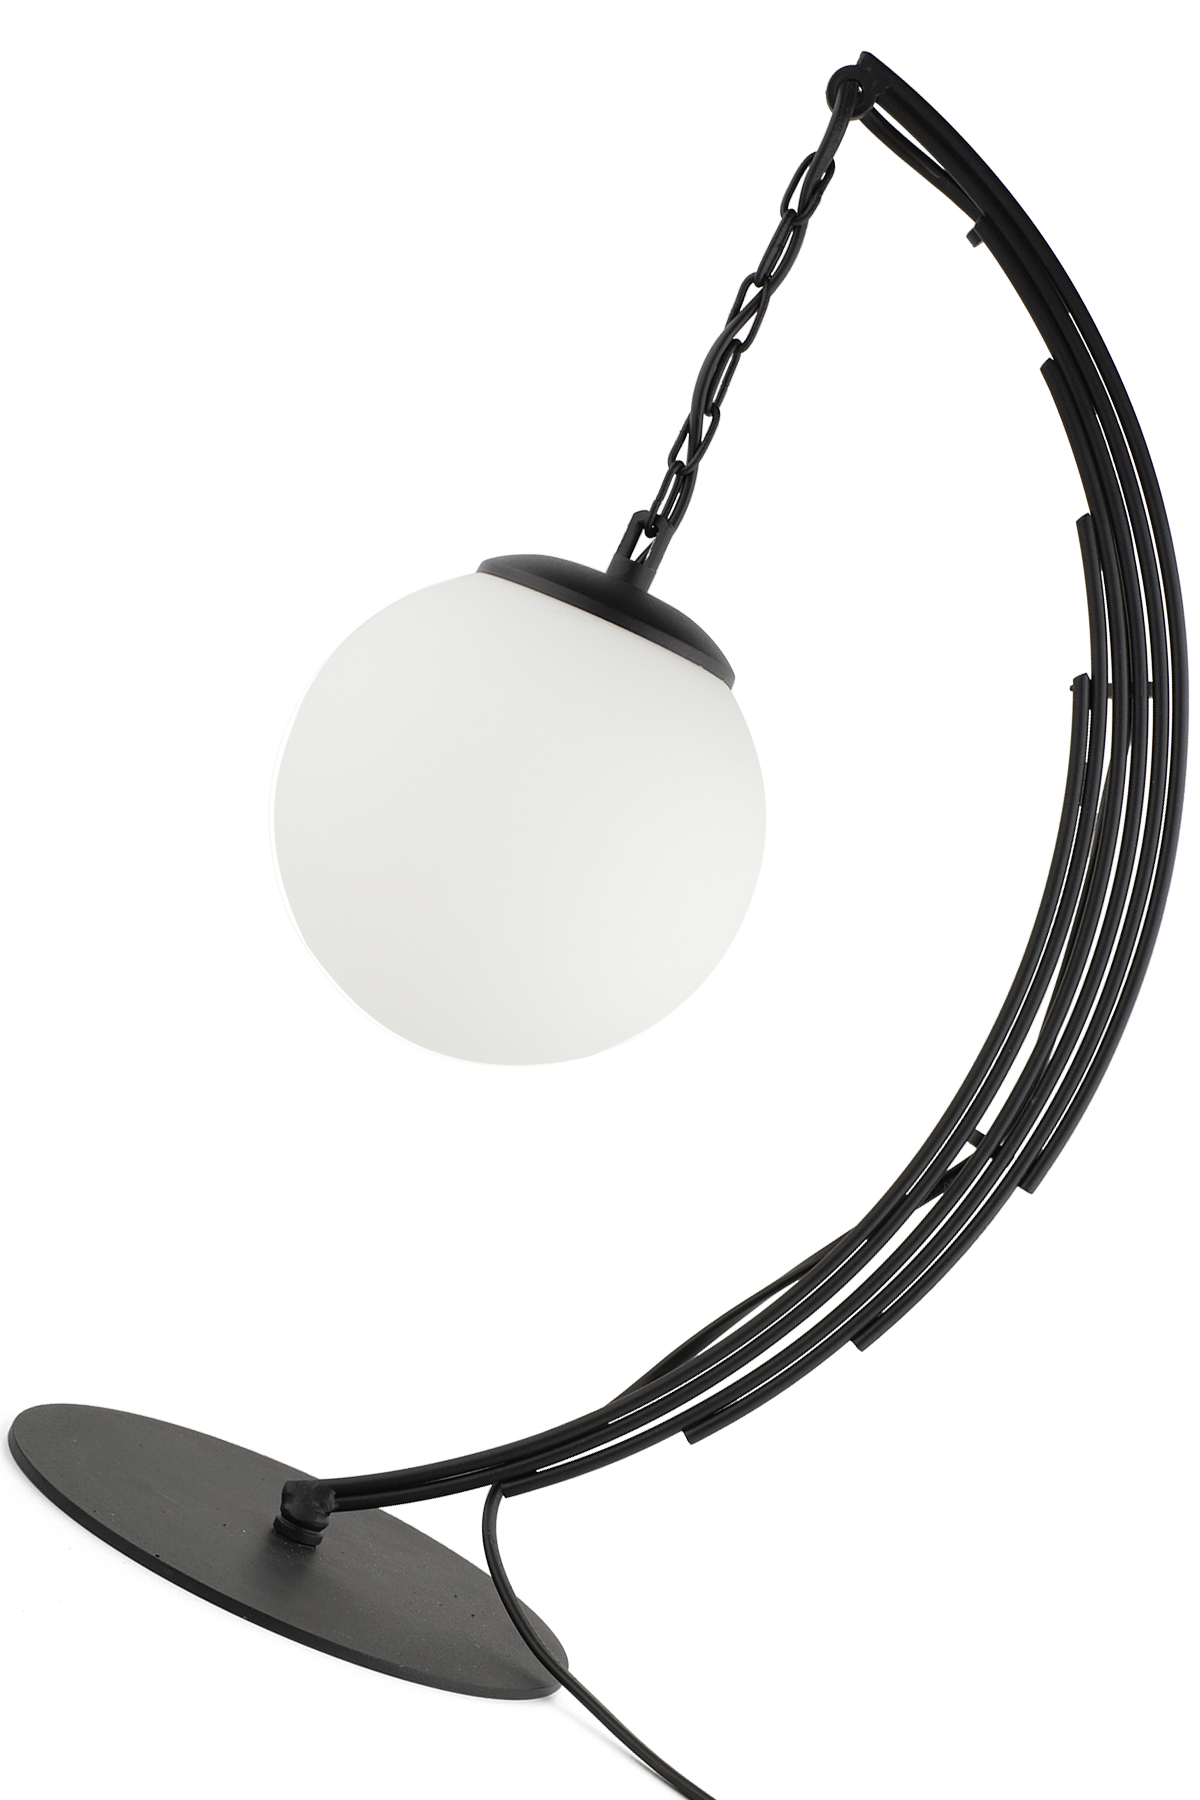 Ayko Table lamp Black,White